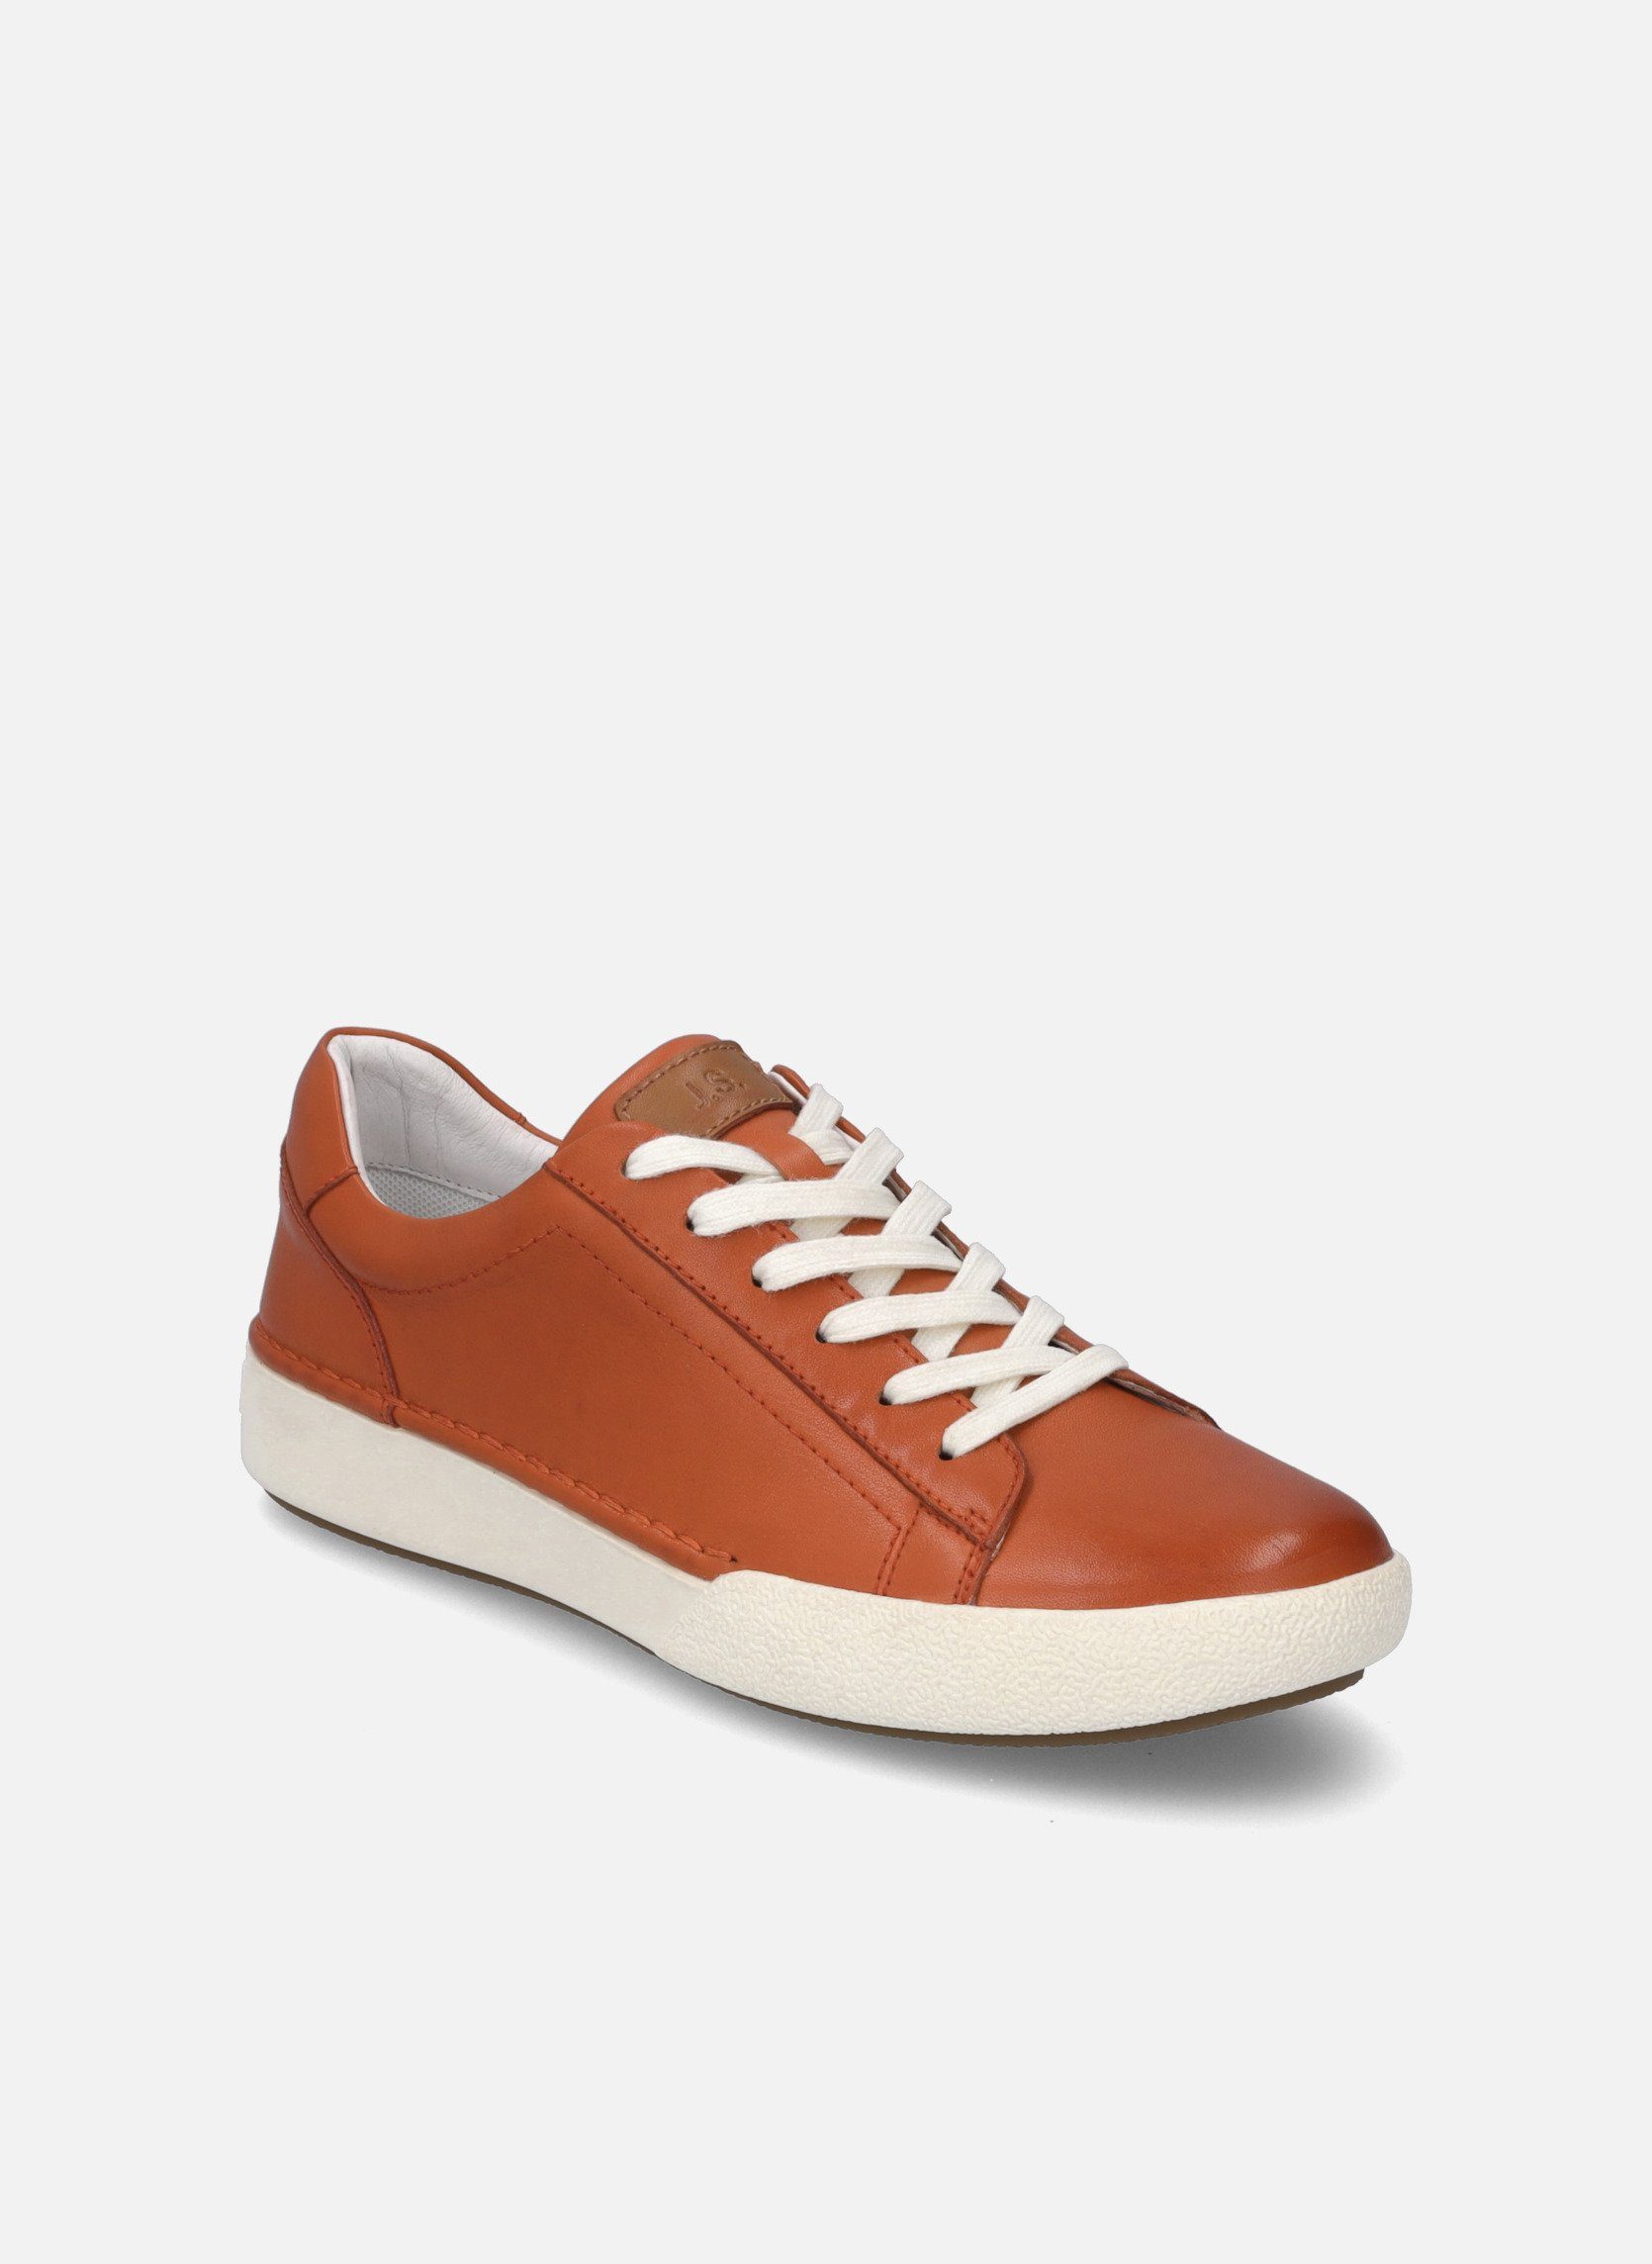 orange Seibel Josef Sneaker 01, Claire